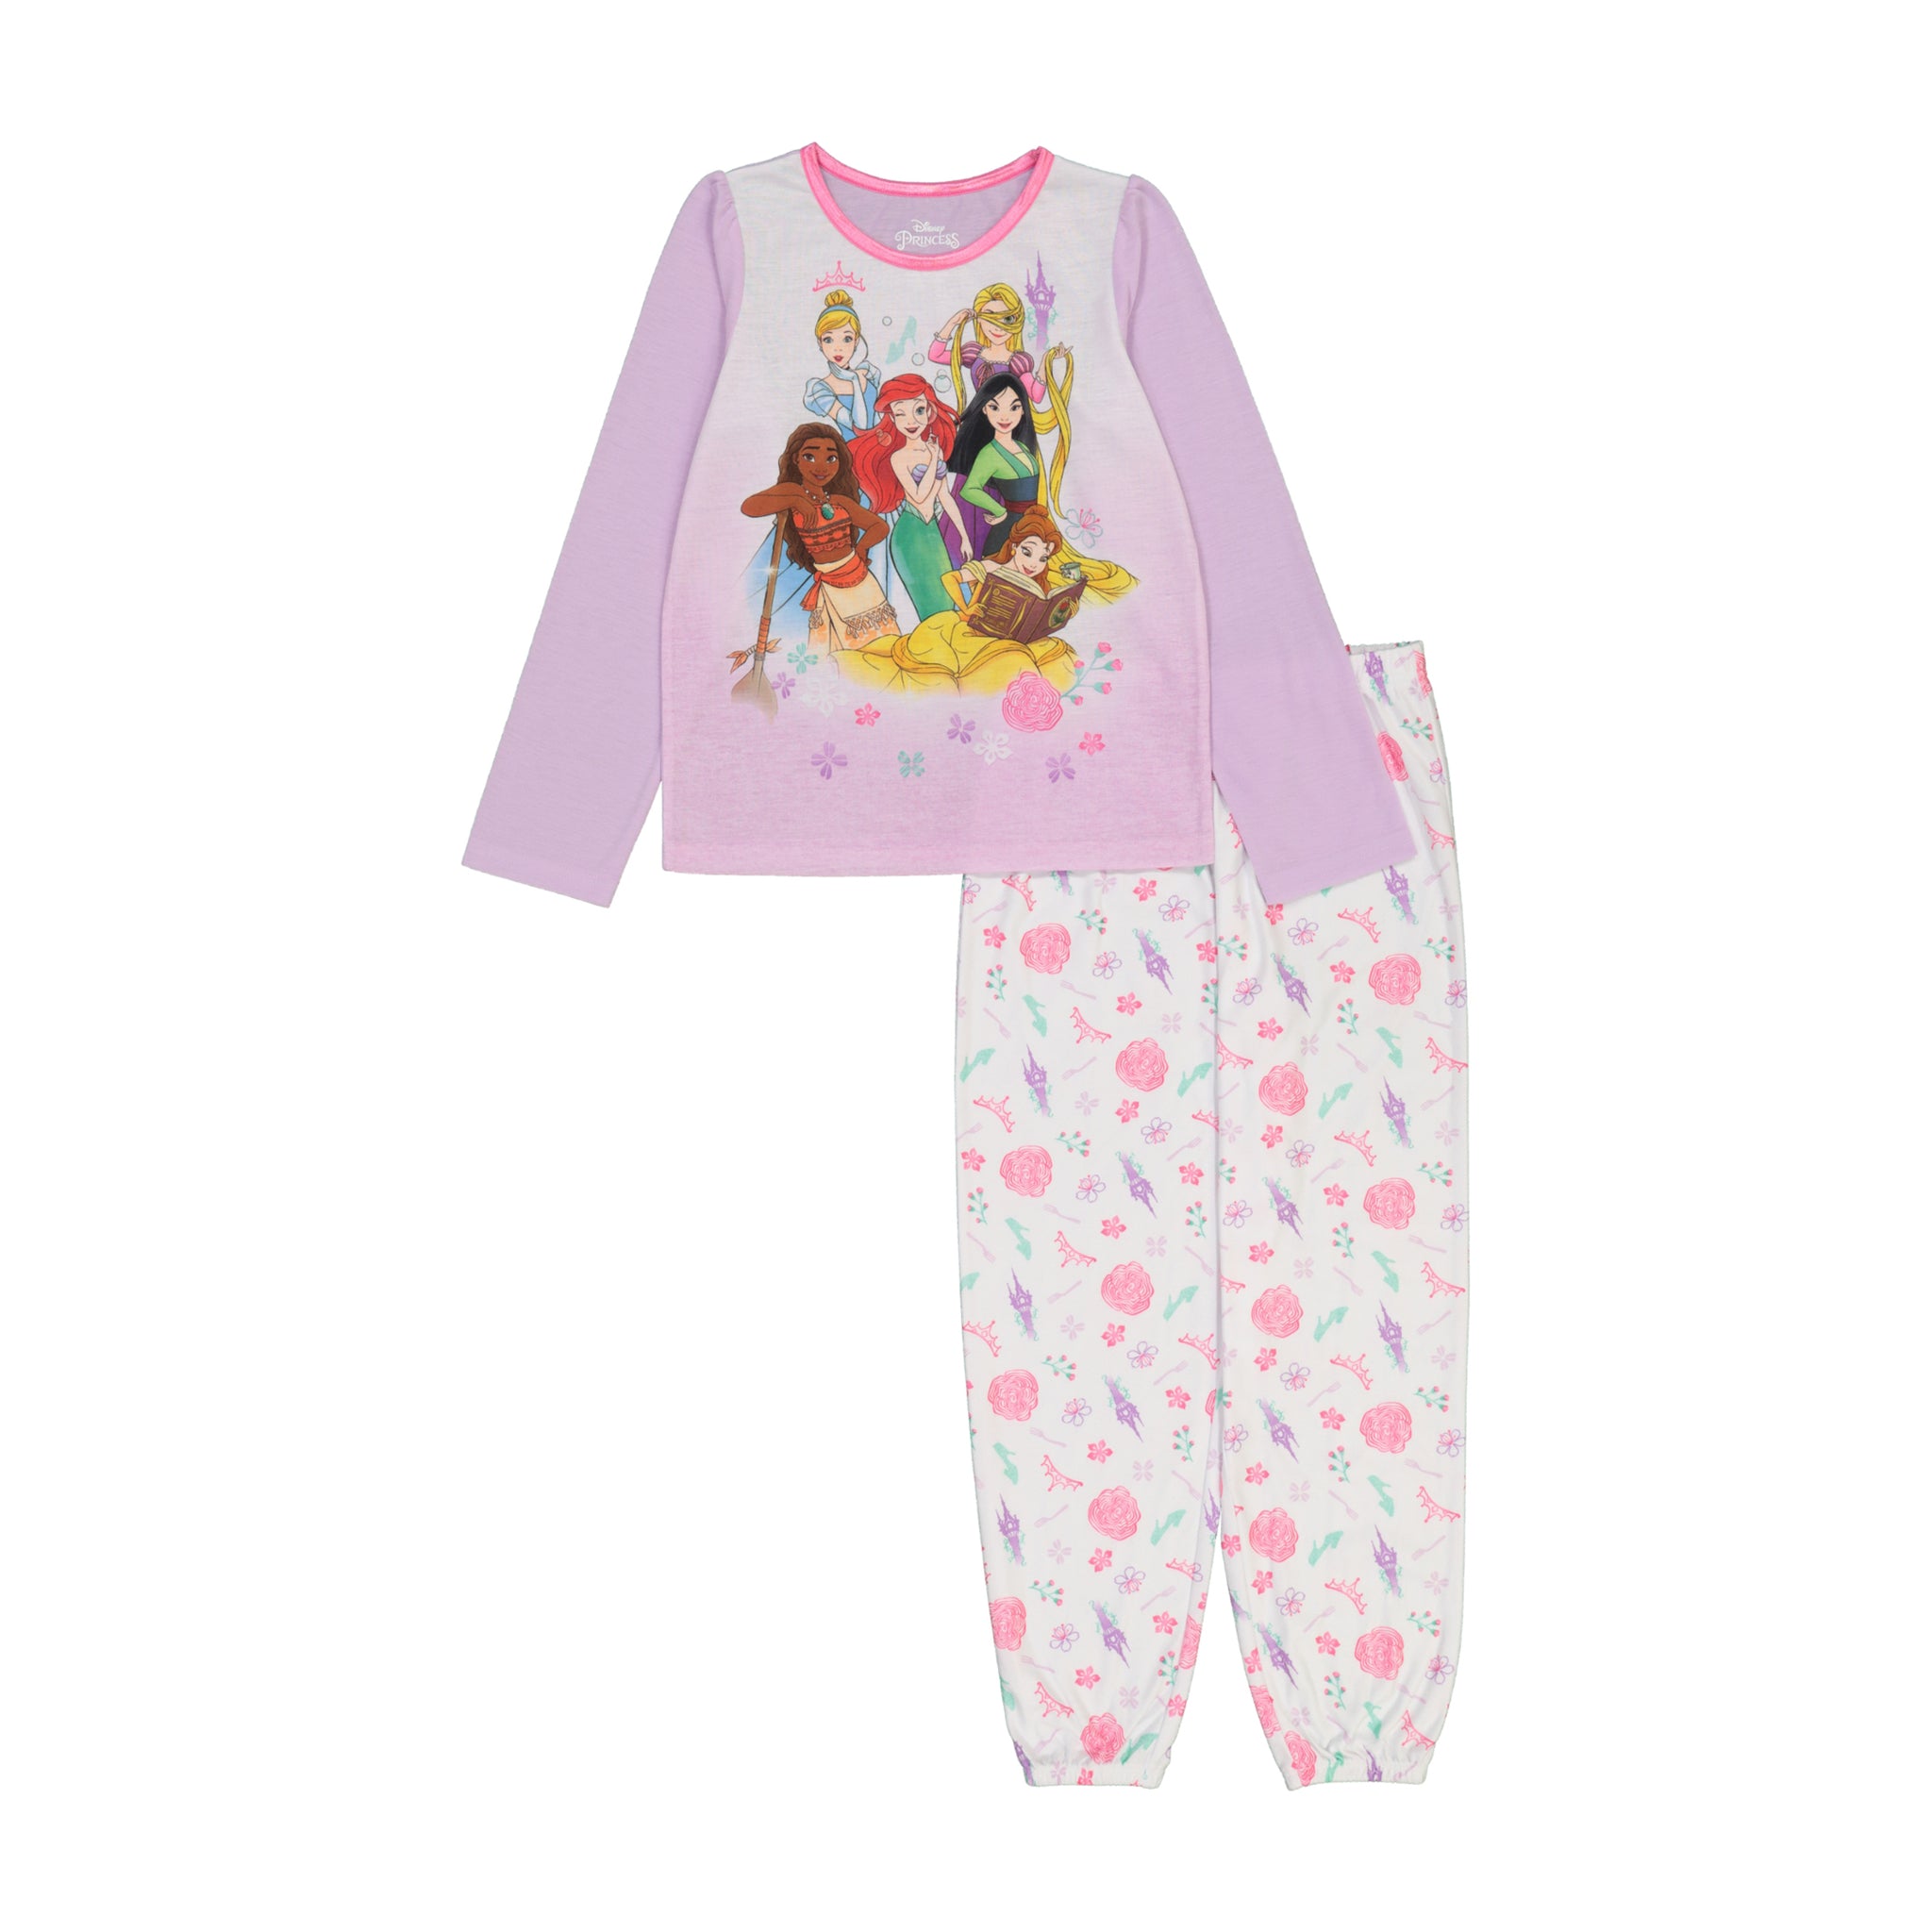 Disney Princess Girls Pajama Set, Long Sleeve Top and Pants 2pc PJ Outfit, 4-10, Purple - FPI Ventures